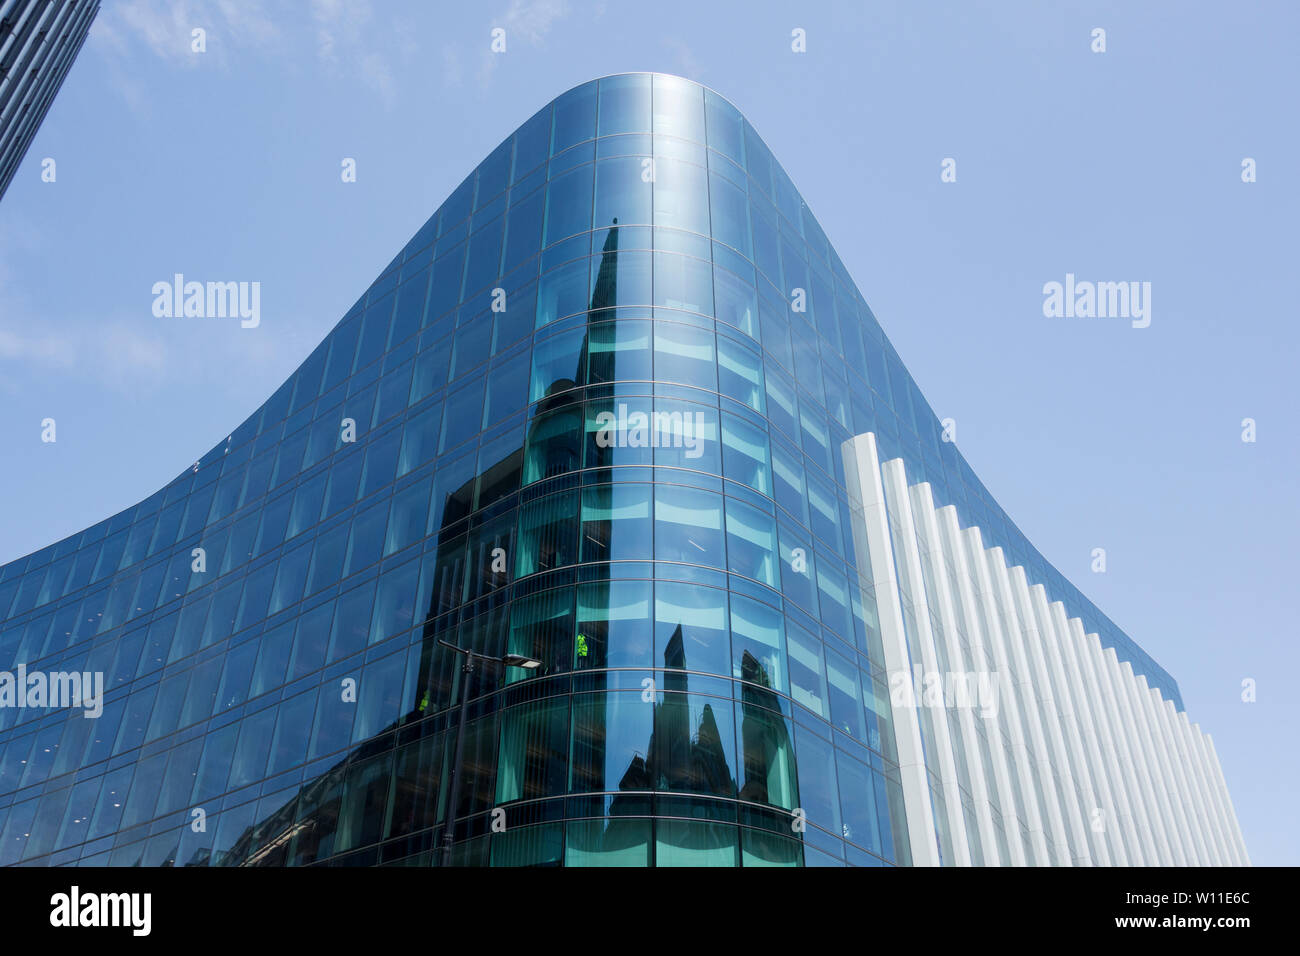 Goldman Sachs' Plumtree Court European headquarters building on Stonecutter Street, City of London, UK Stock Photo